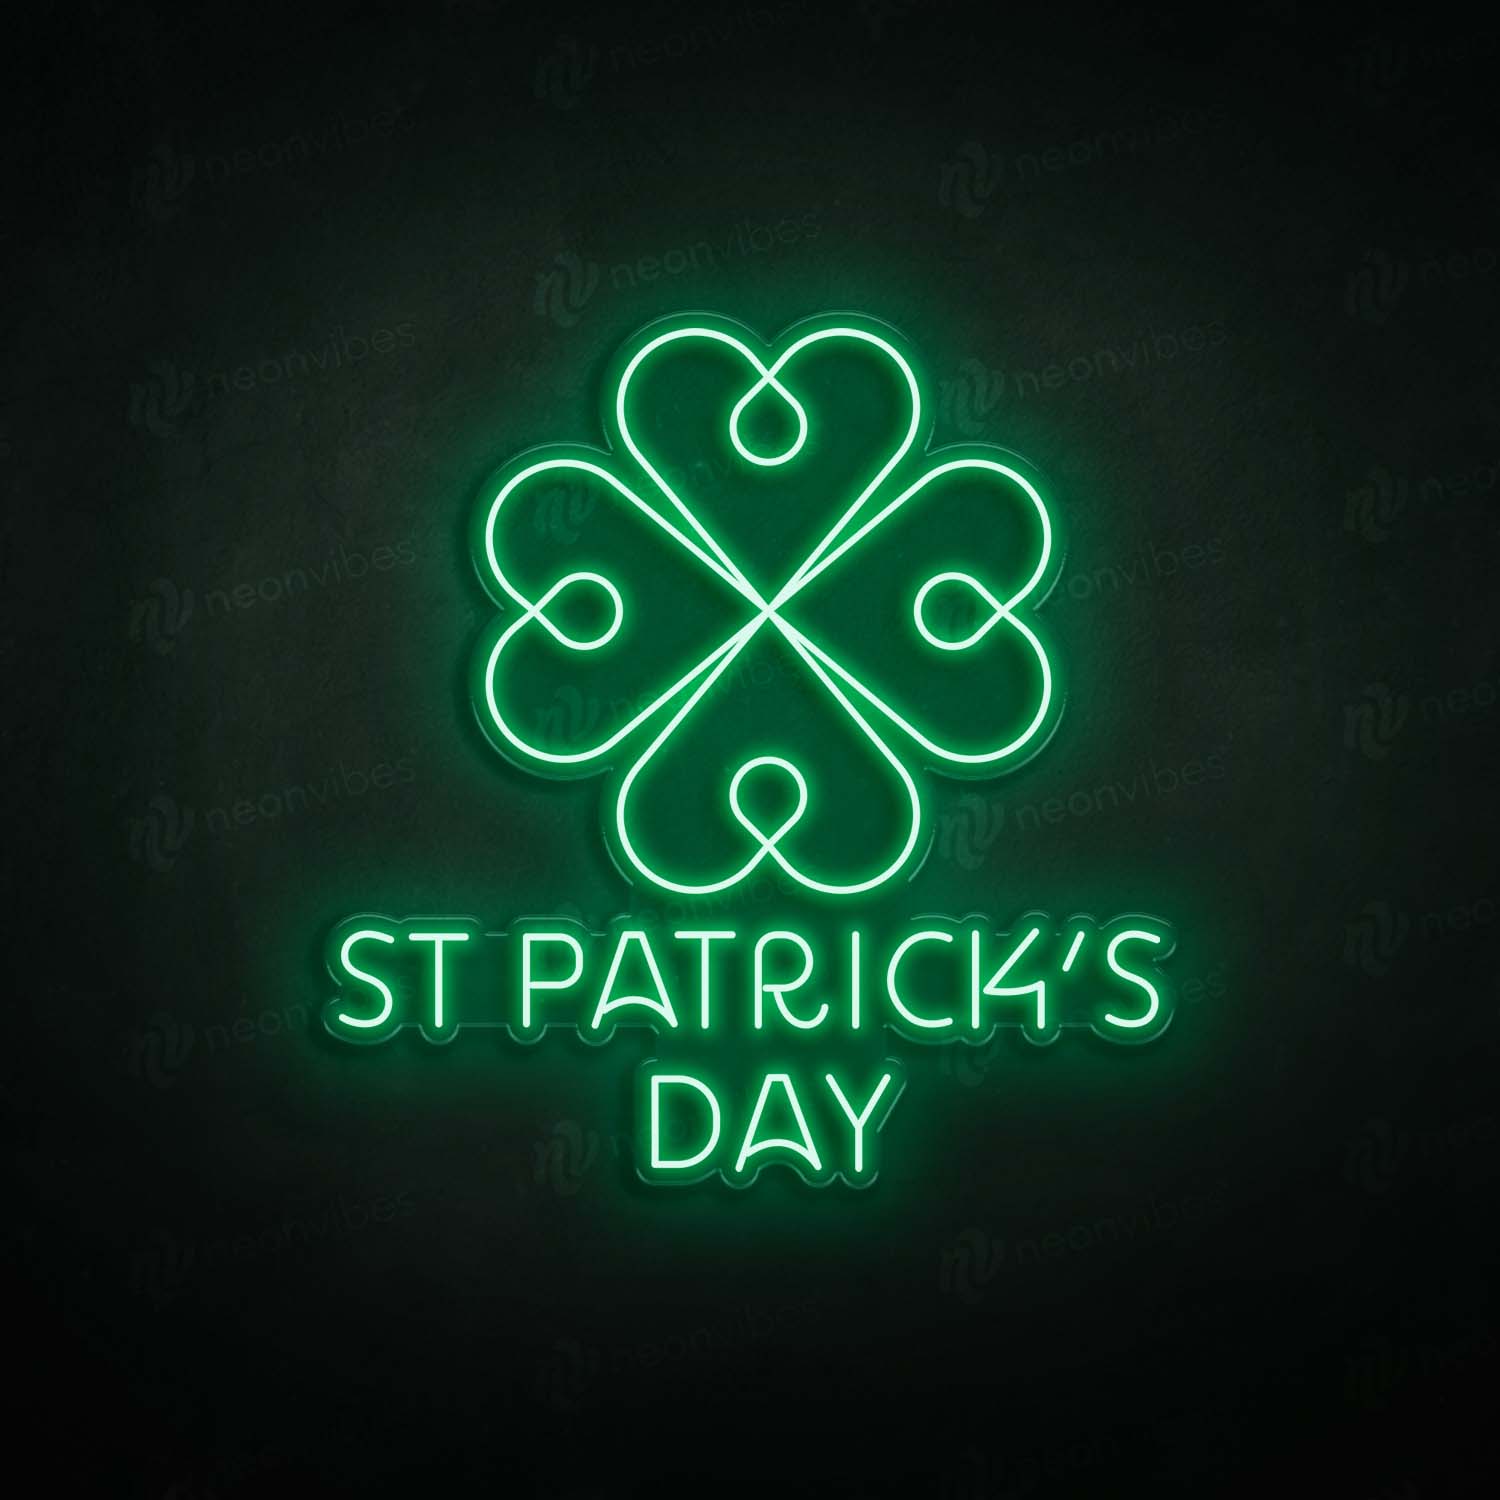 St Patricks Day neon sign